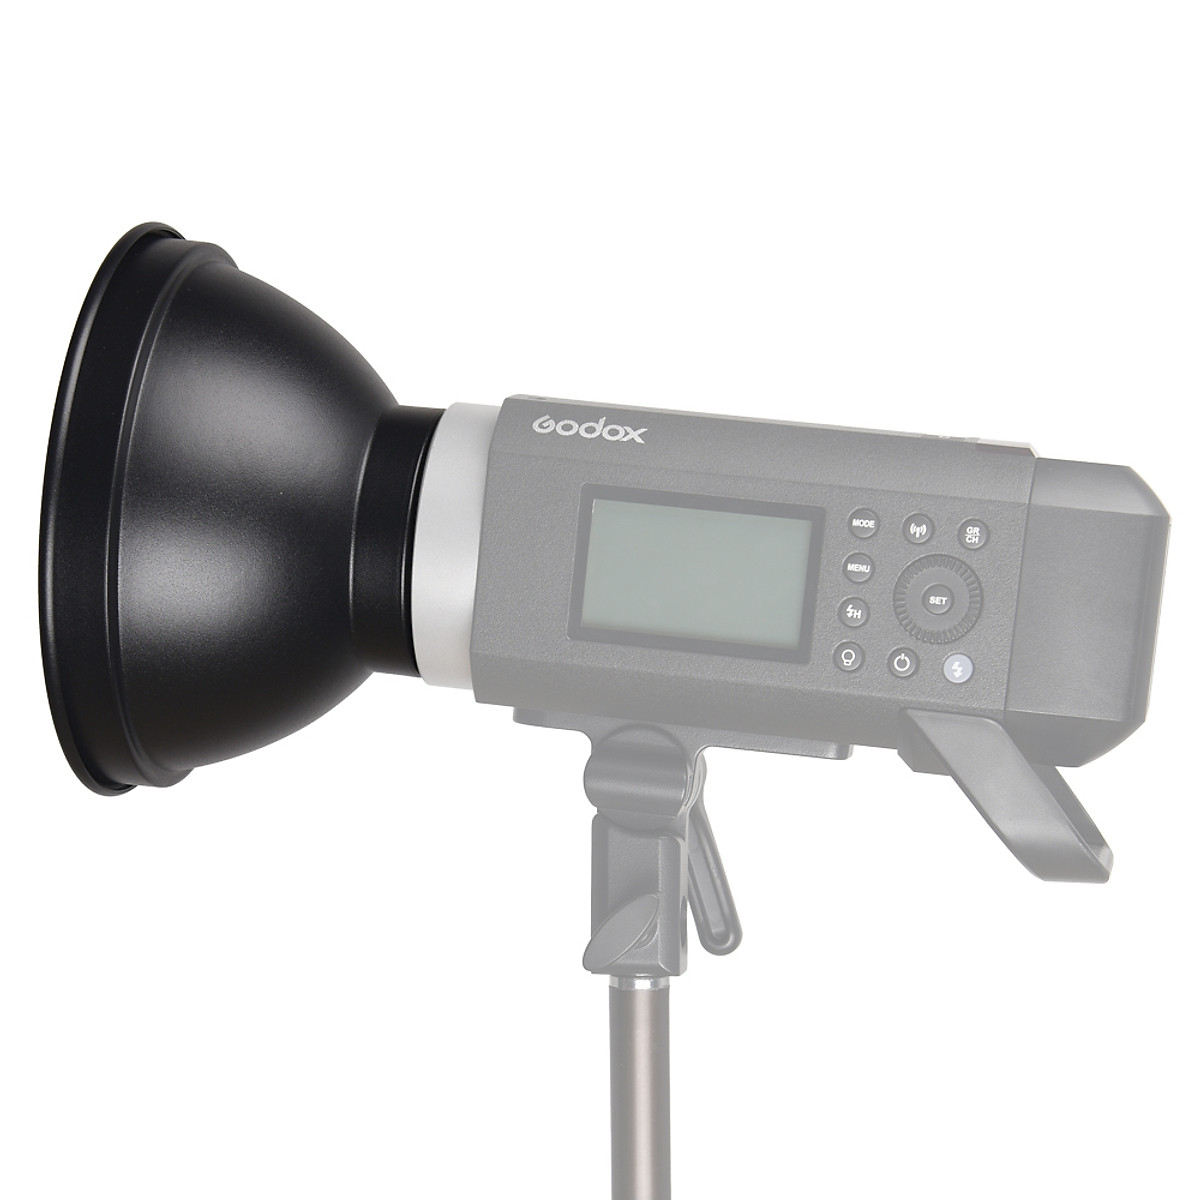 Godox AD-R11 7 Inch/18cm Standard Reflector Diffuser Lamp Shade Dish for Godox AD400PRO Flash Strobe Light Monolight Speedlites 